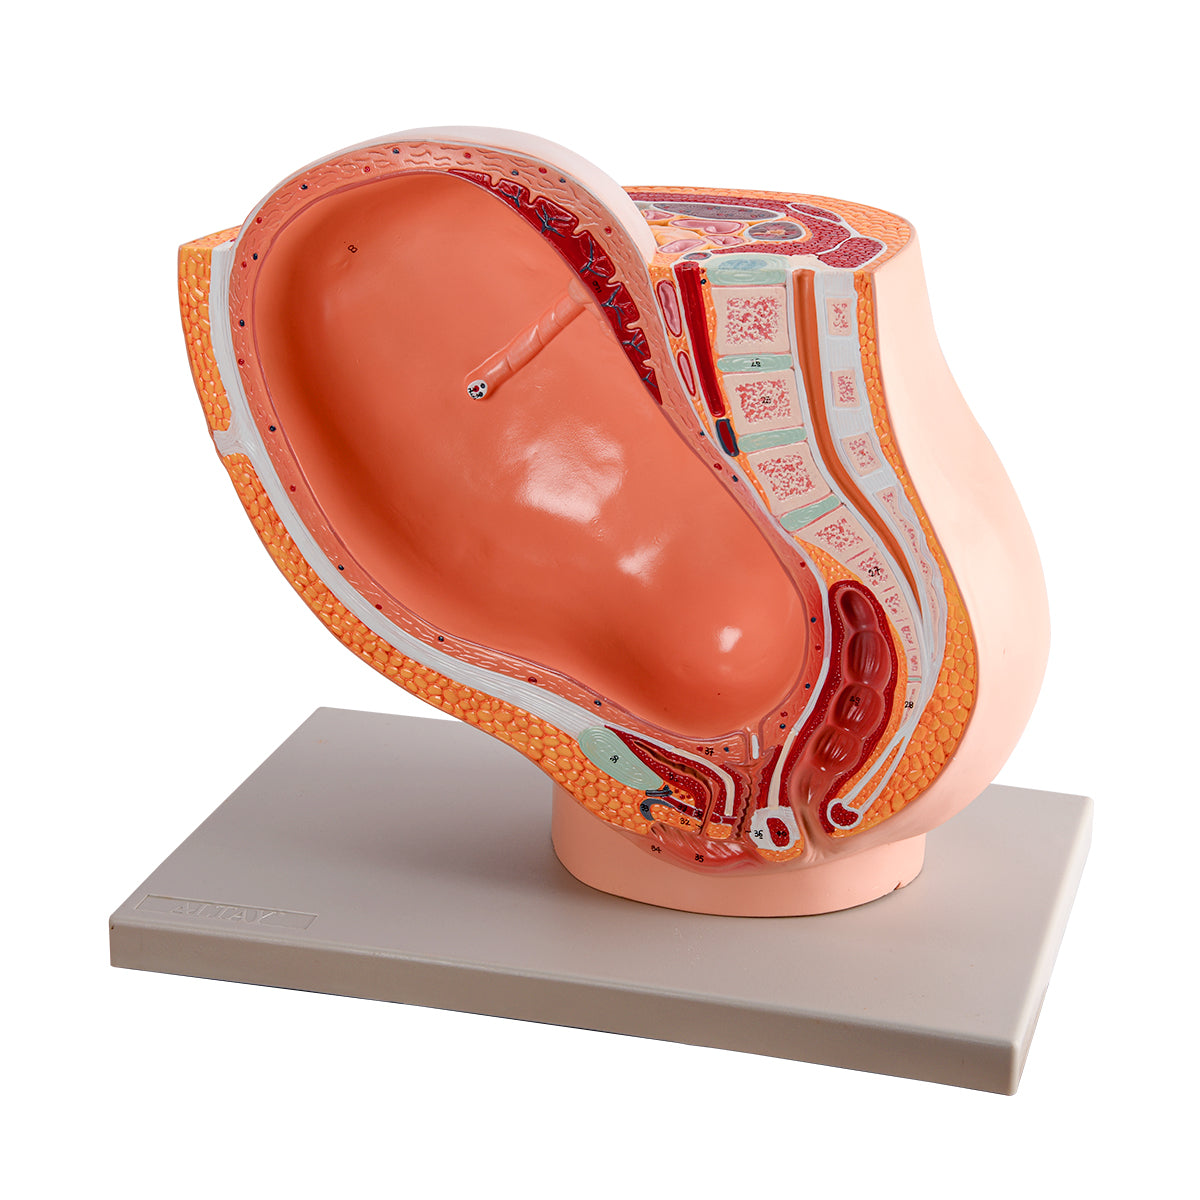 Evotech Scientific Pregnancy Pelvis W/ Mature Fetus Numbered Anatomy Model, Life Size, 2 Parts